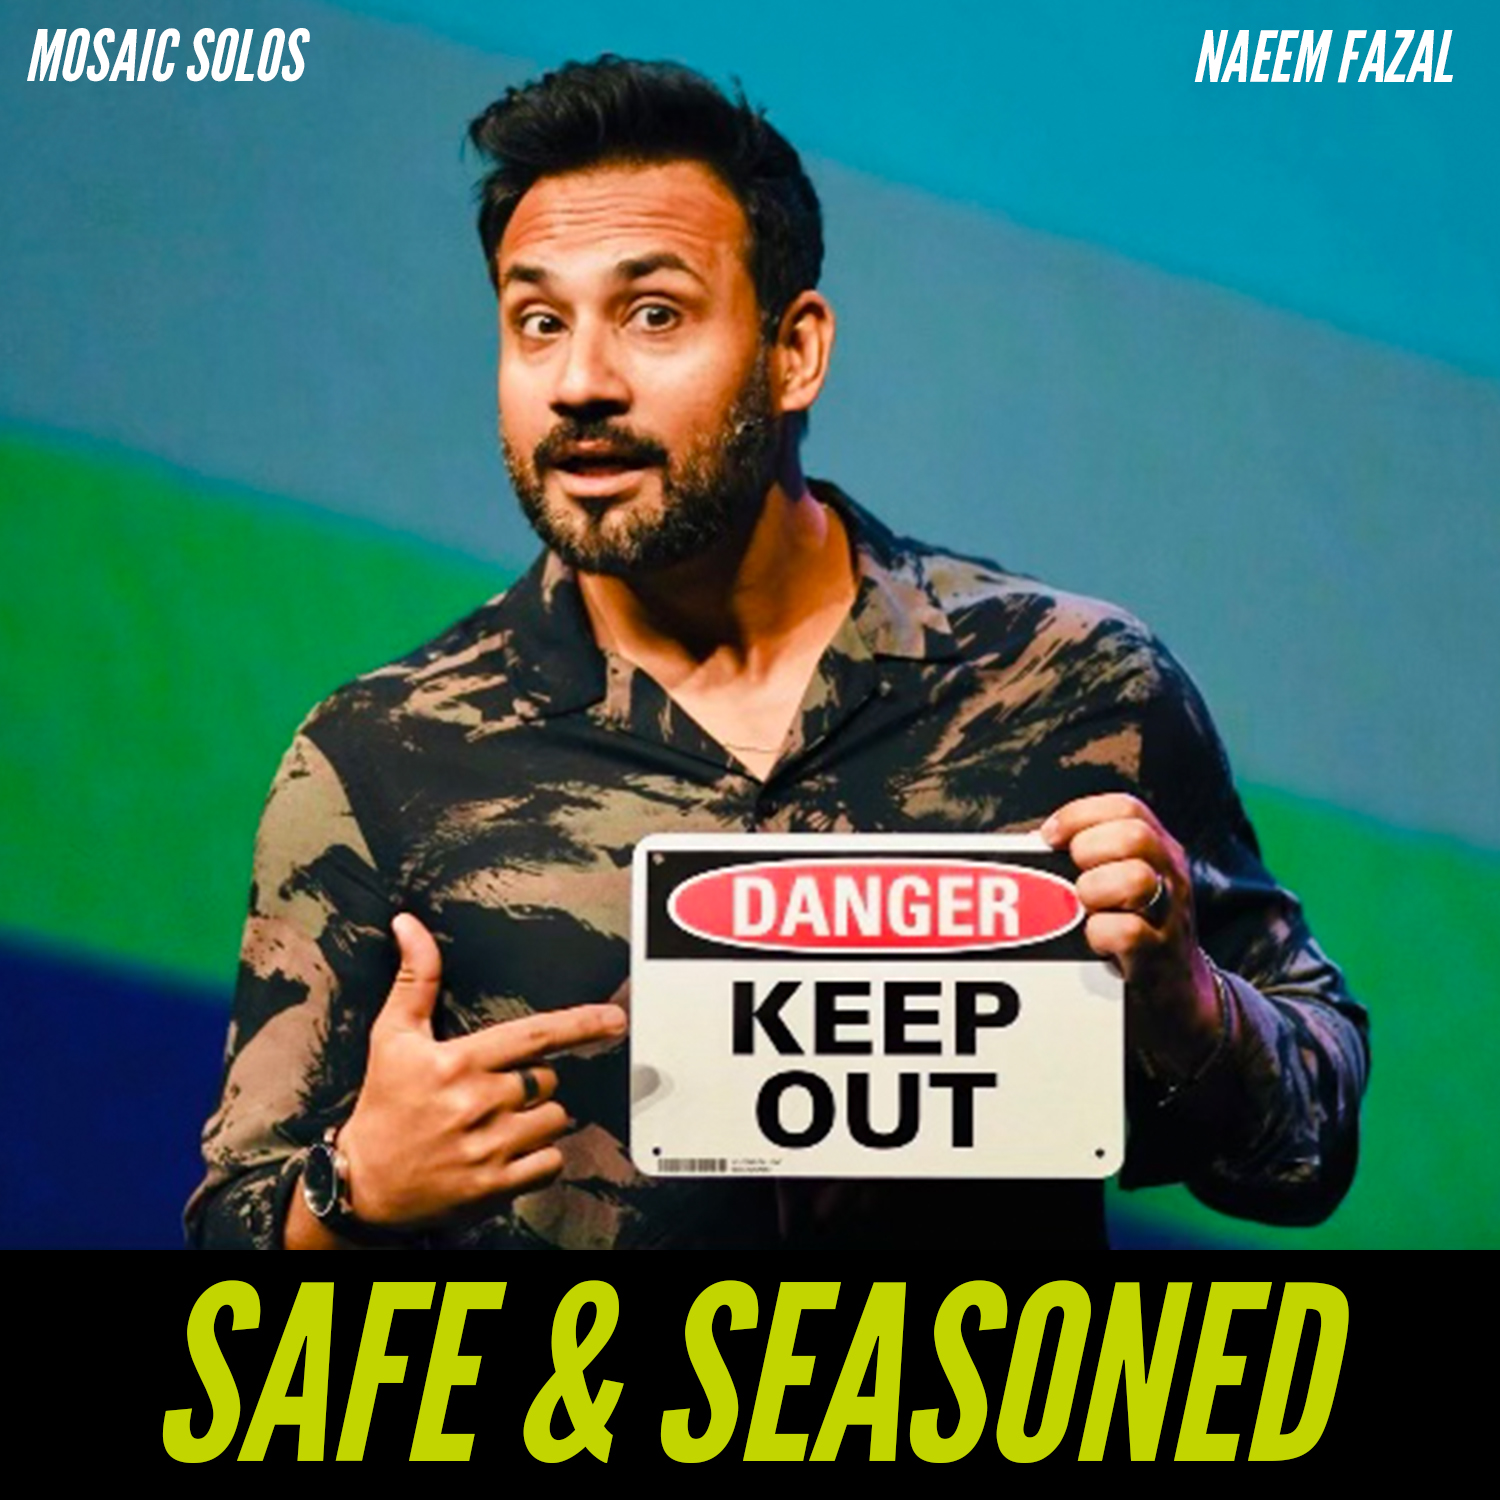 Safe & Seasoned - Naeem Fazal